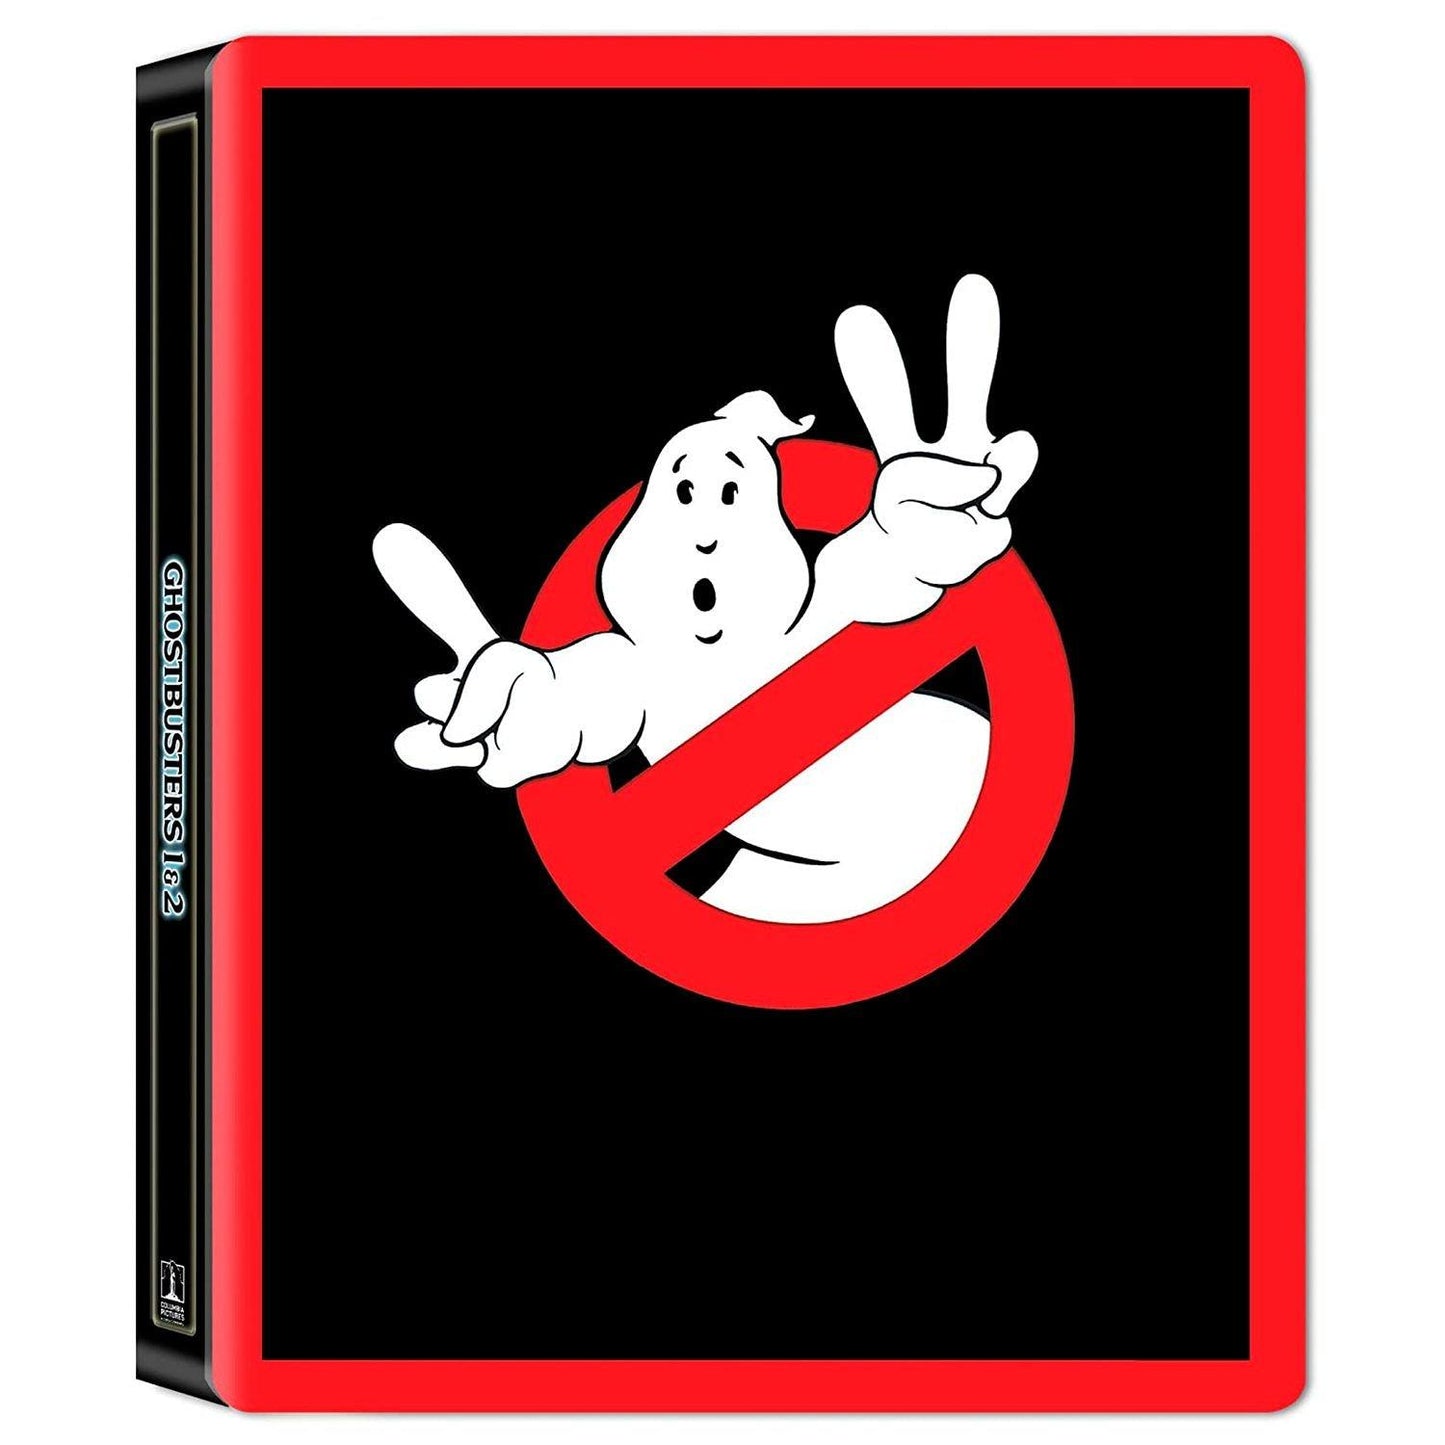 Охотники за привидениями 1 + 2 (2 4K UHD + 2 Blu-ray + Бонусный диск) Steelbook